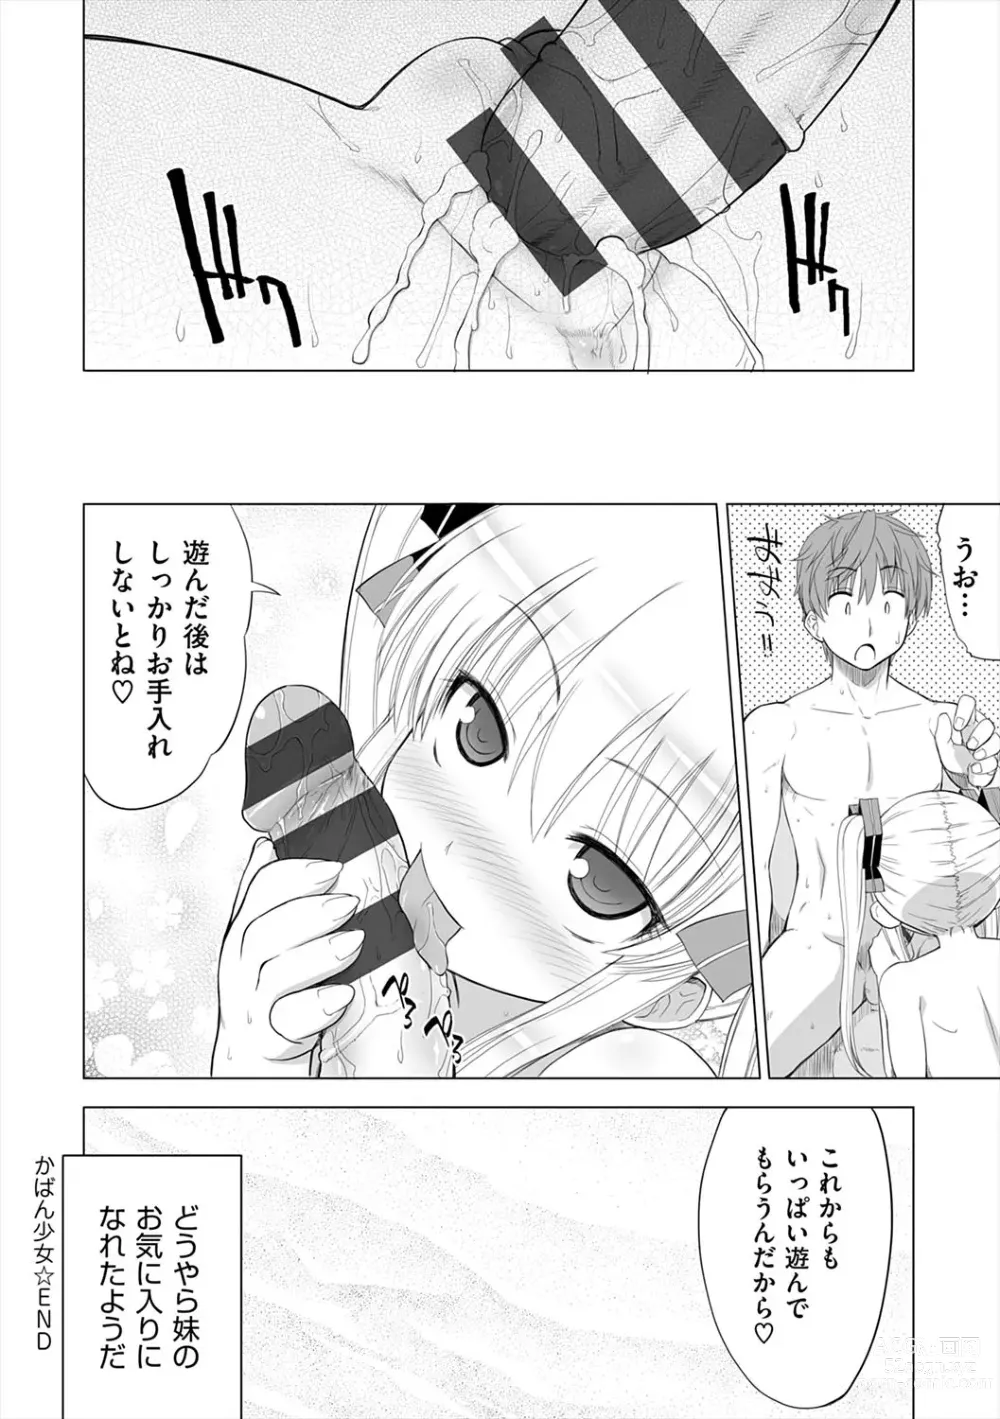 Page 204 of manga Marble Girls